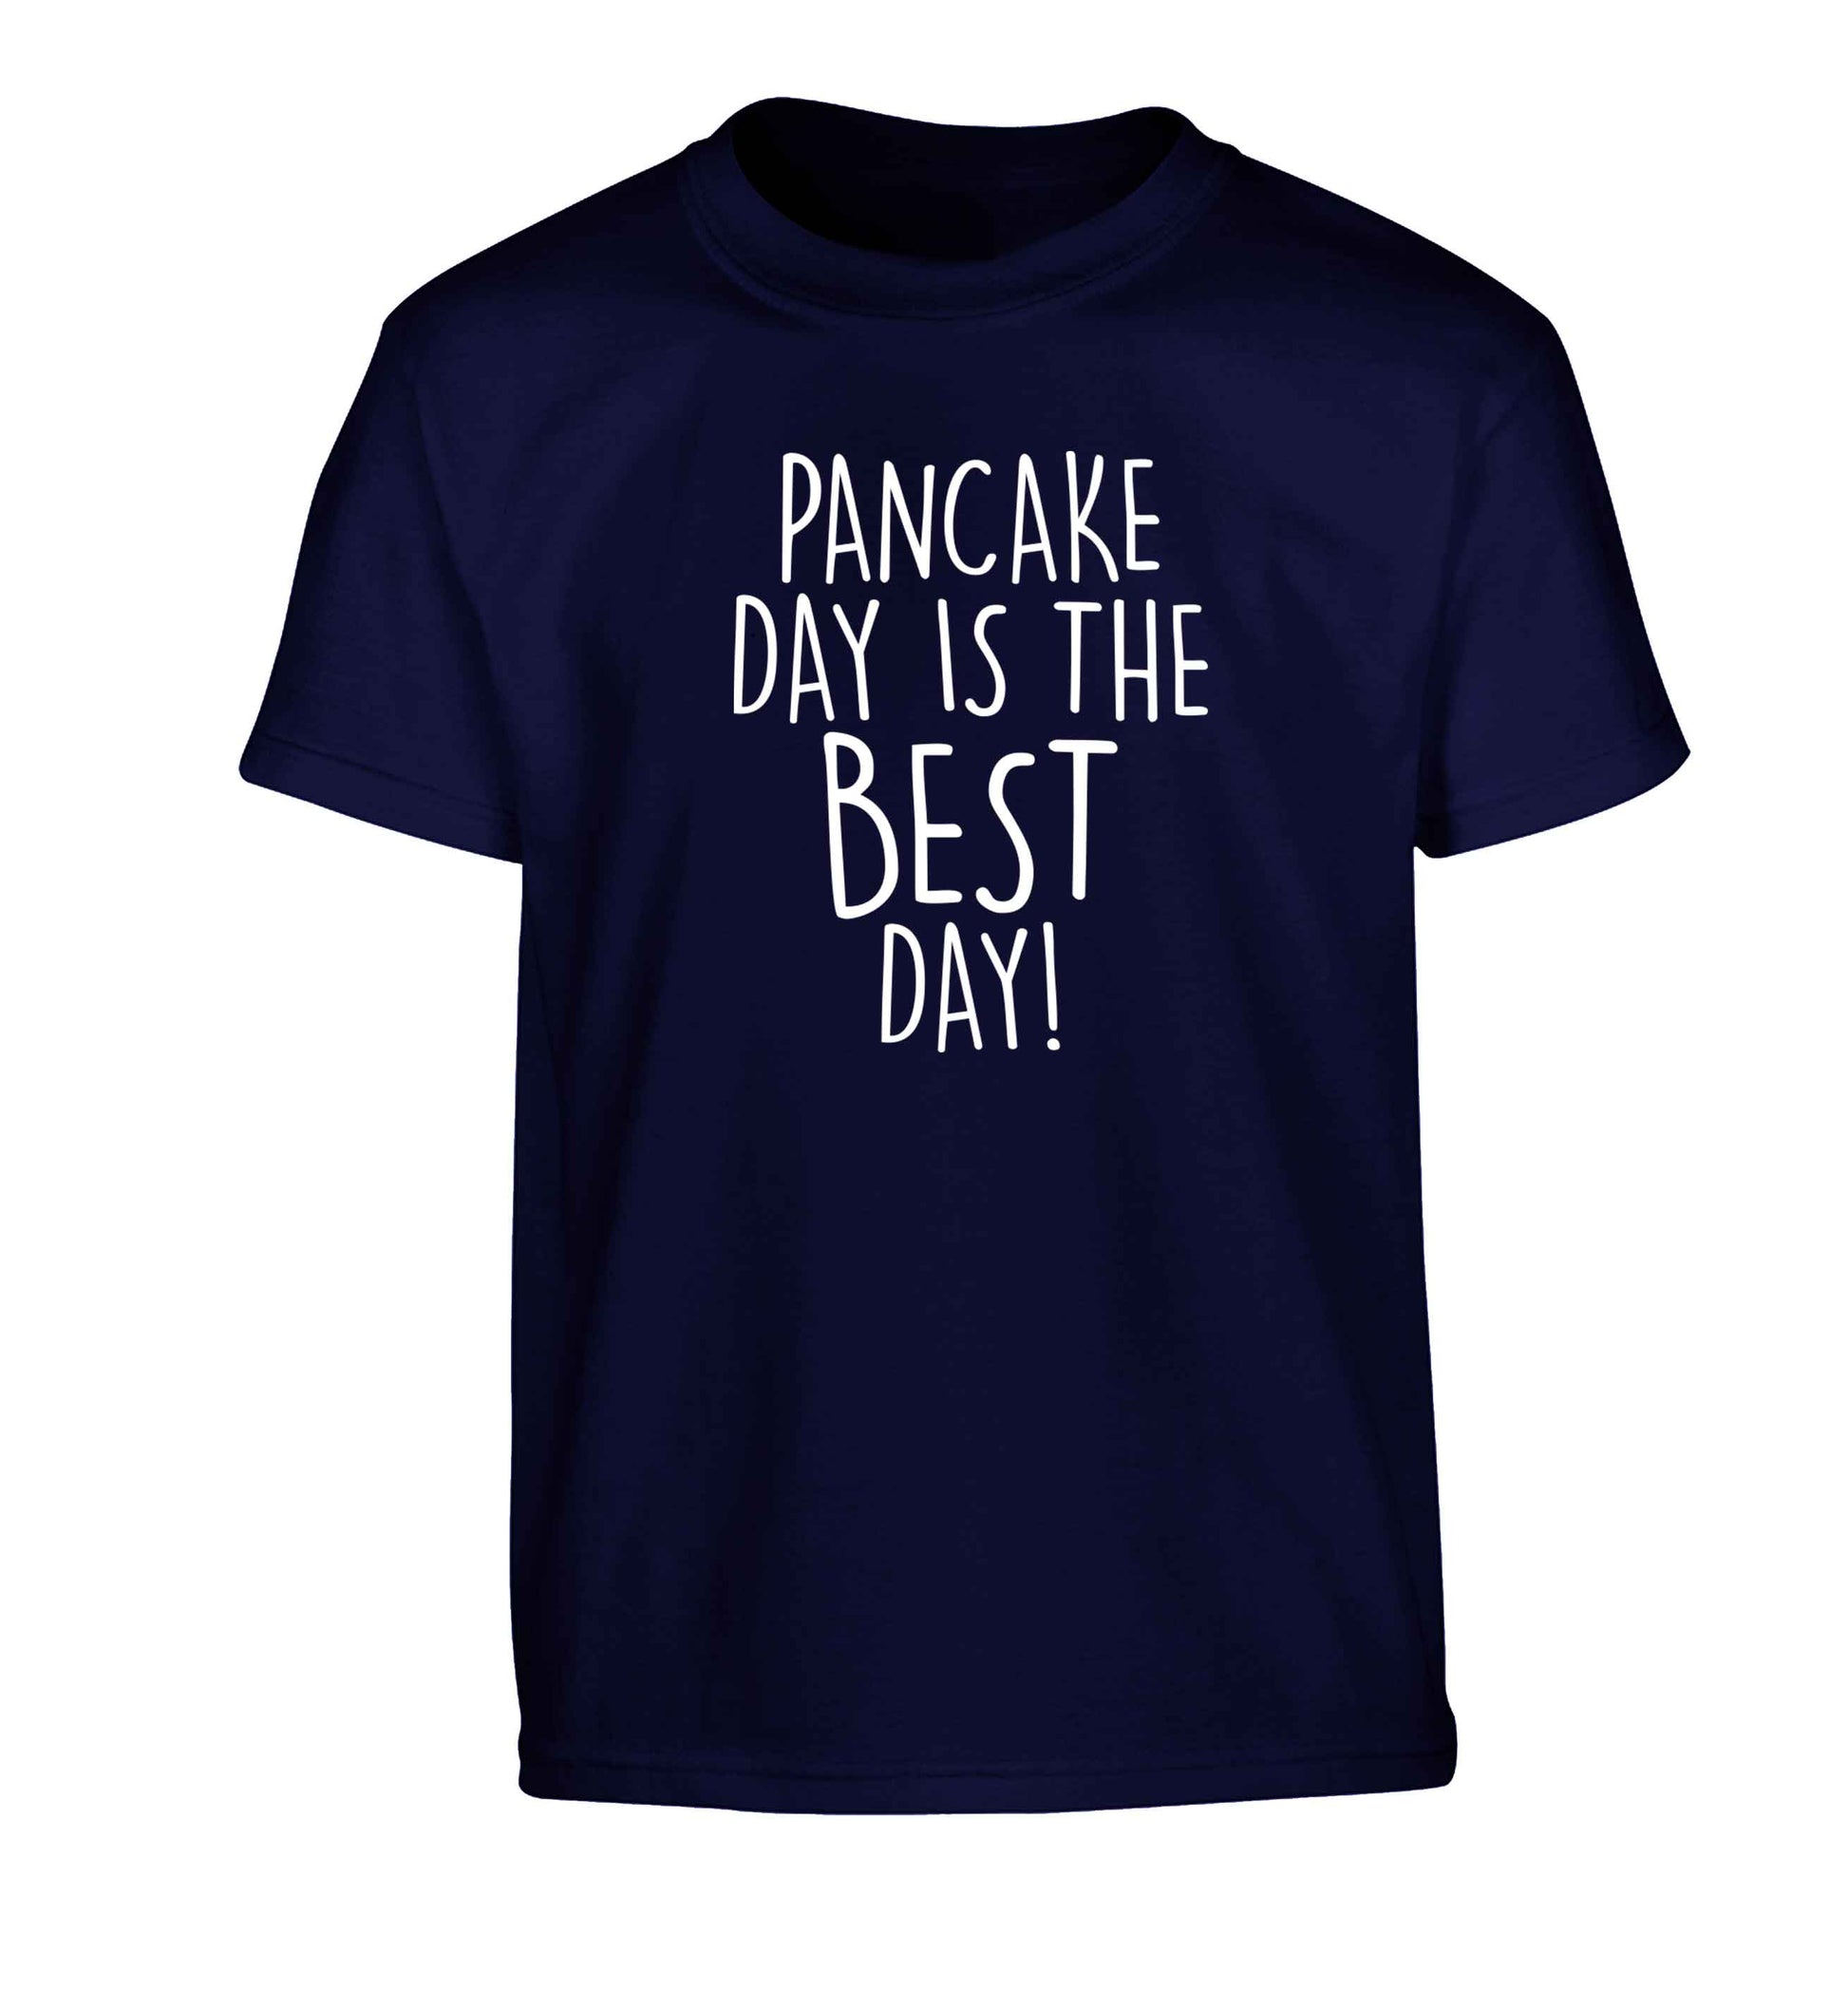 Pancake day is the best day Children's navy Tshirt 12-13 Years